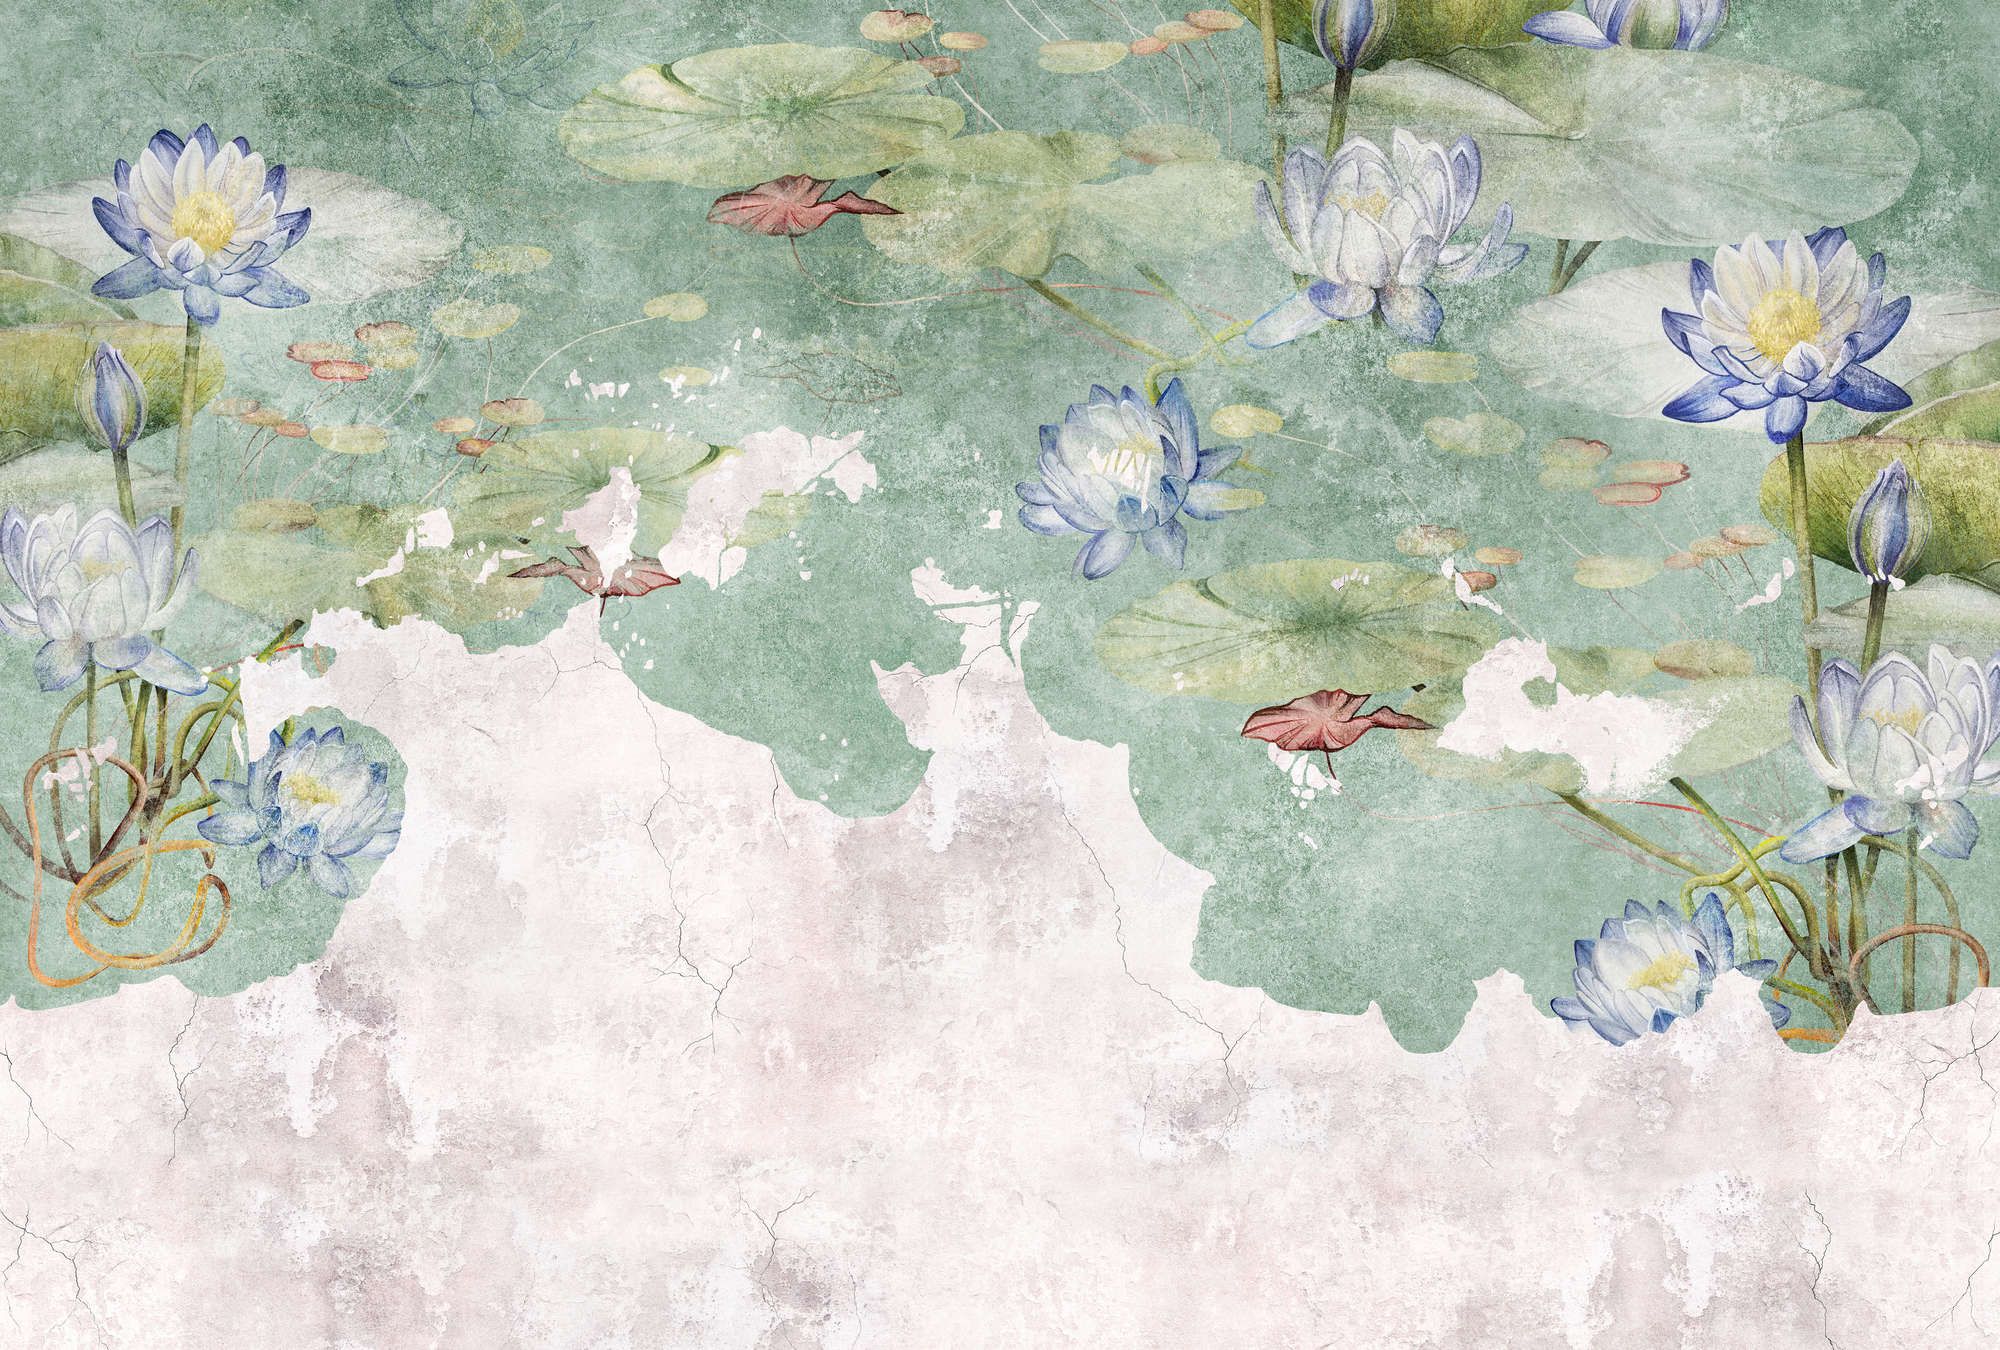             Digital behang »lelie« - Waterlelies op vintage gipsstructuur op de achtergrond - Matte, gladde vliesstof
        